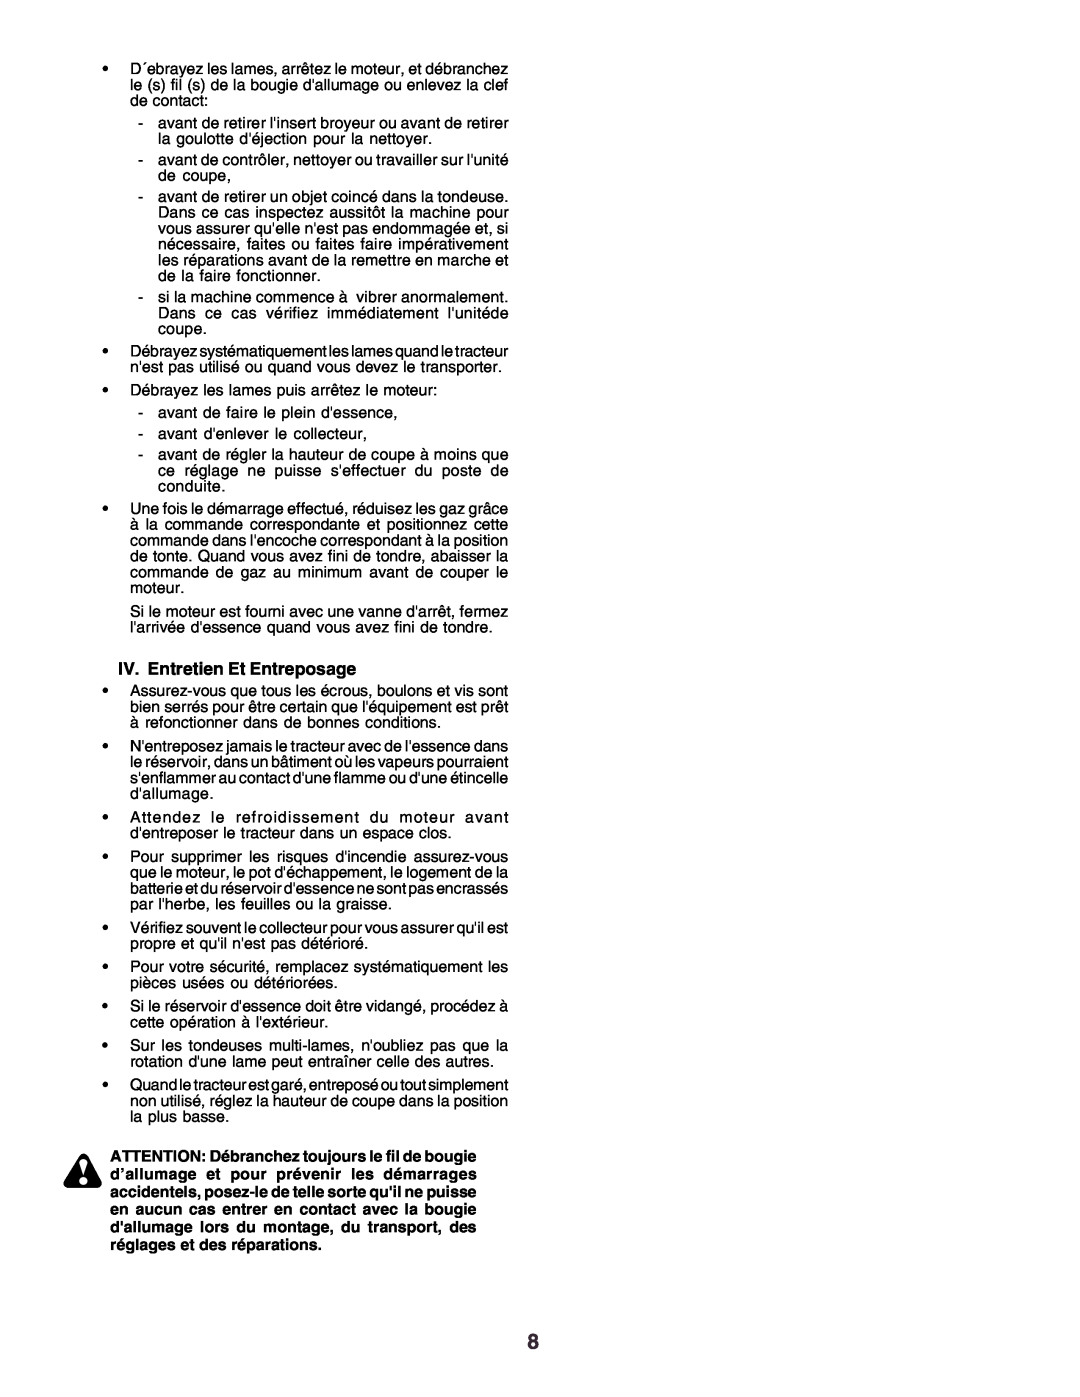 Husqvarna YTH170 instruction manual IV. Entretien Et Entreposage 